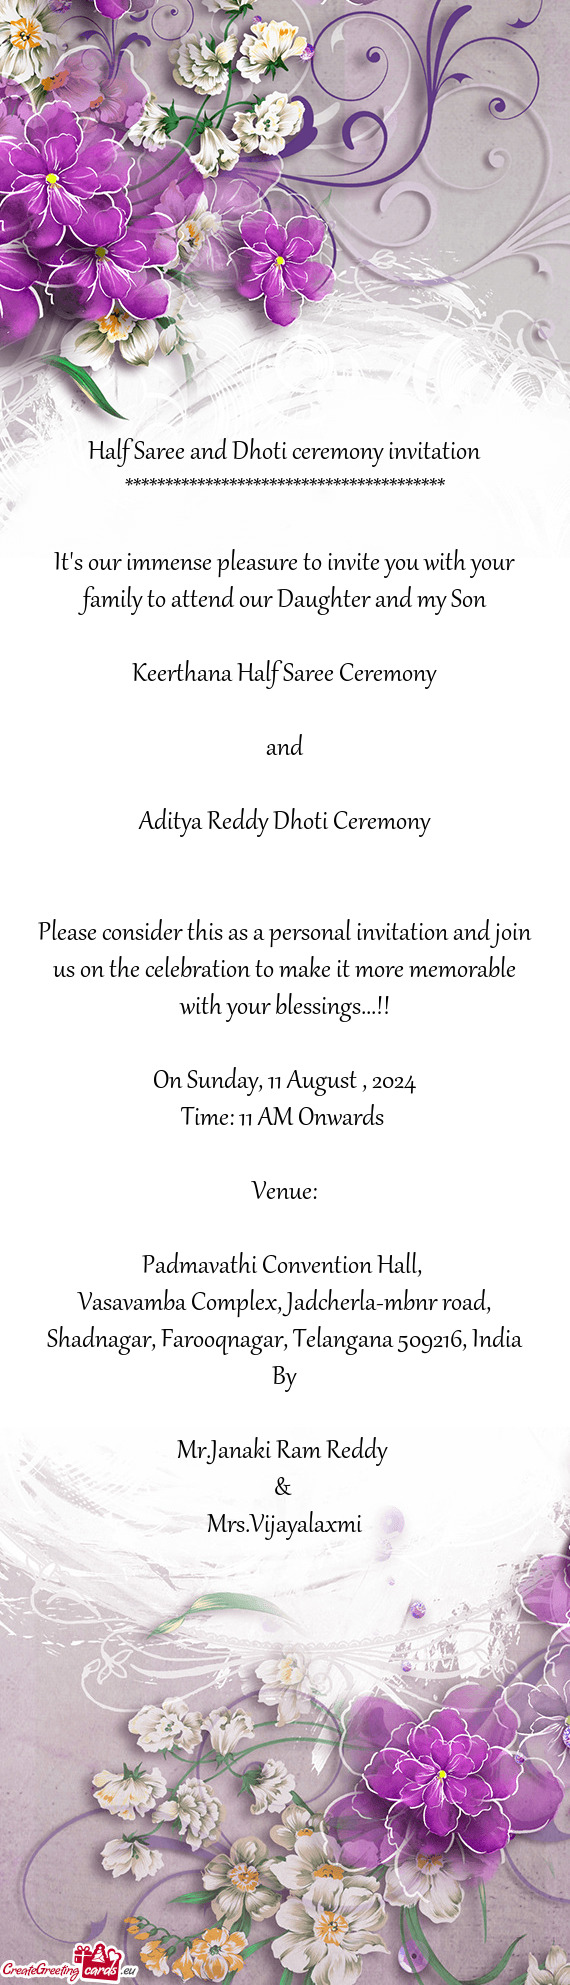 Padmavathi Convention Hall